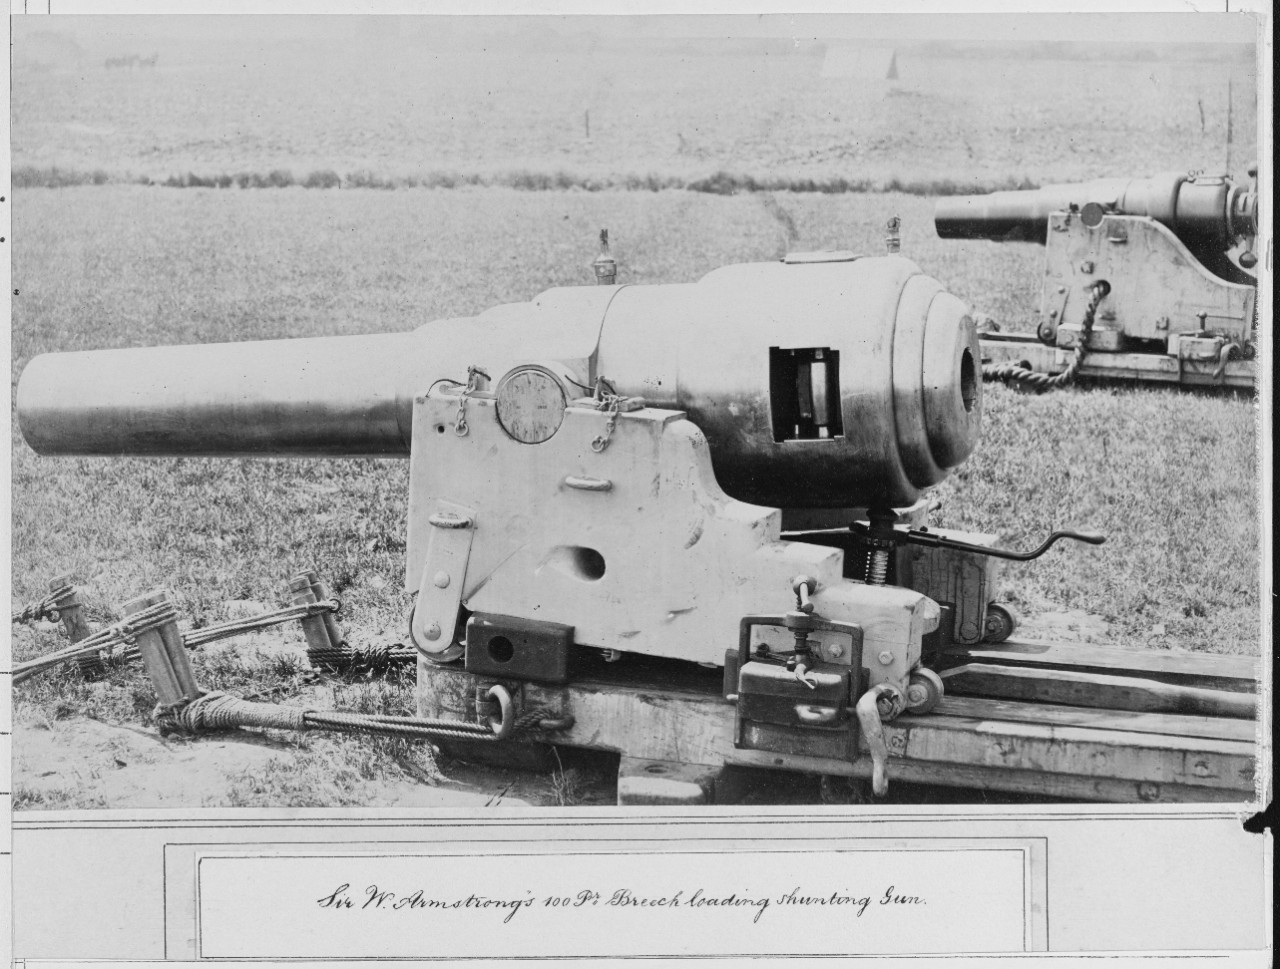 Sir W. Armstrong's Gun